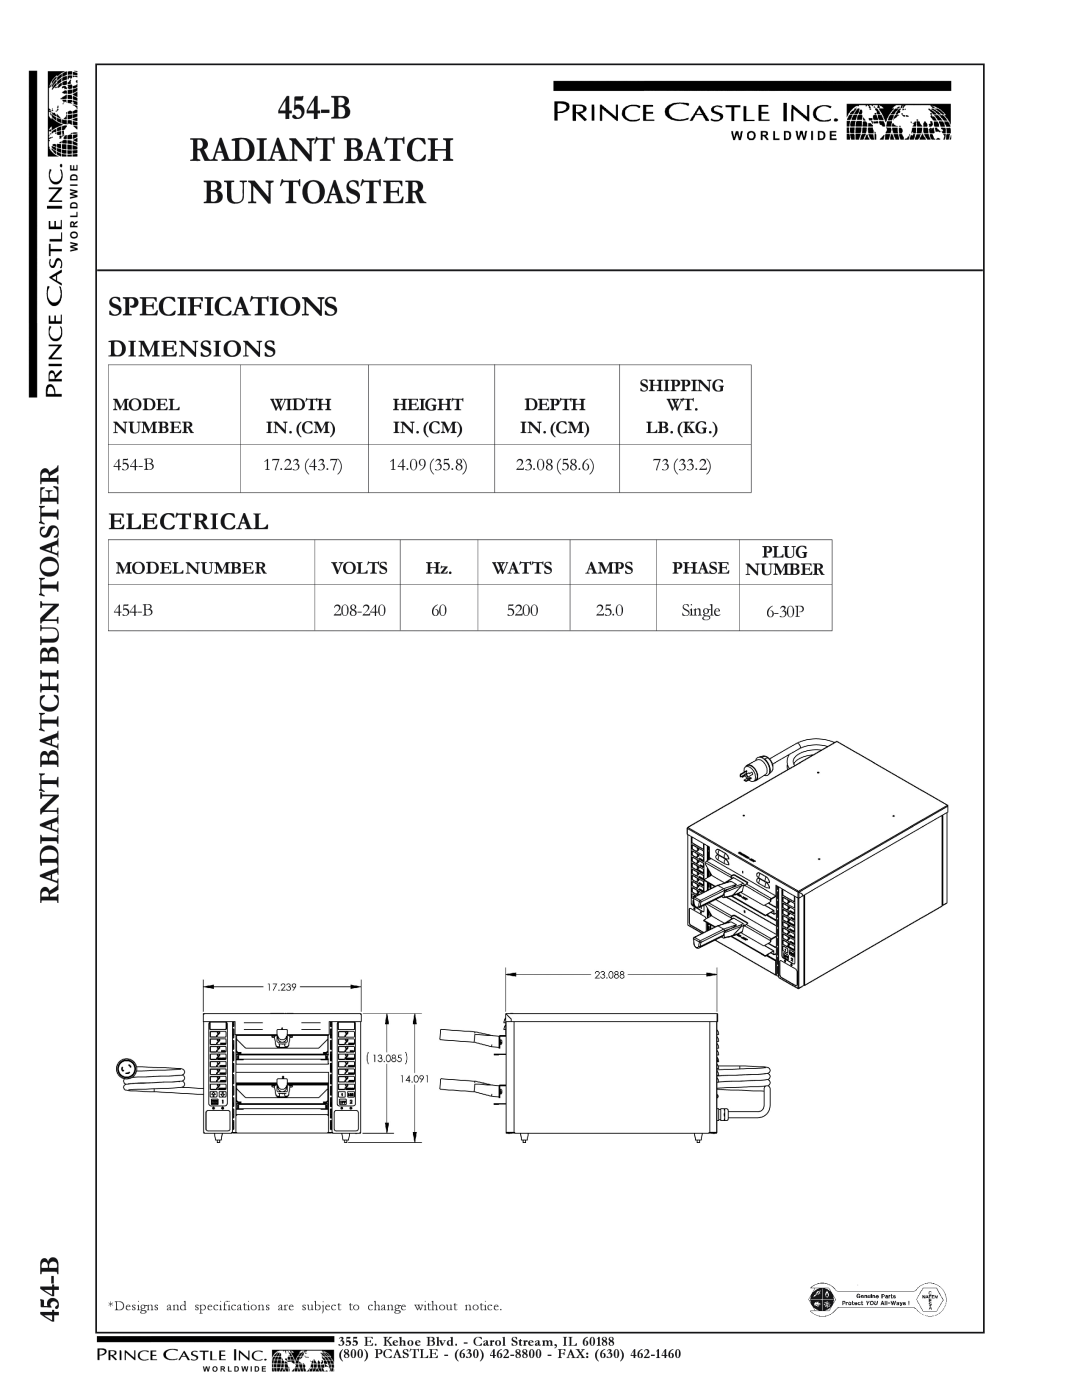 Prince Castle RADIANT BATCH BUN TOASTER 454-B, Specifications, Radiant Batch Bun Toaster, Dimensions, Electrical 